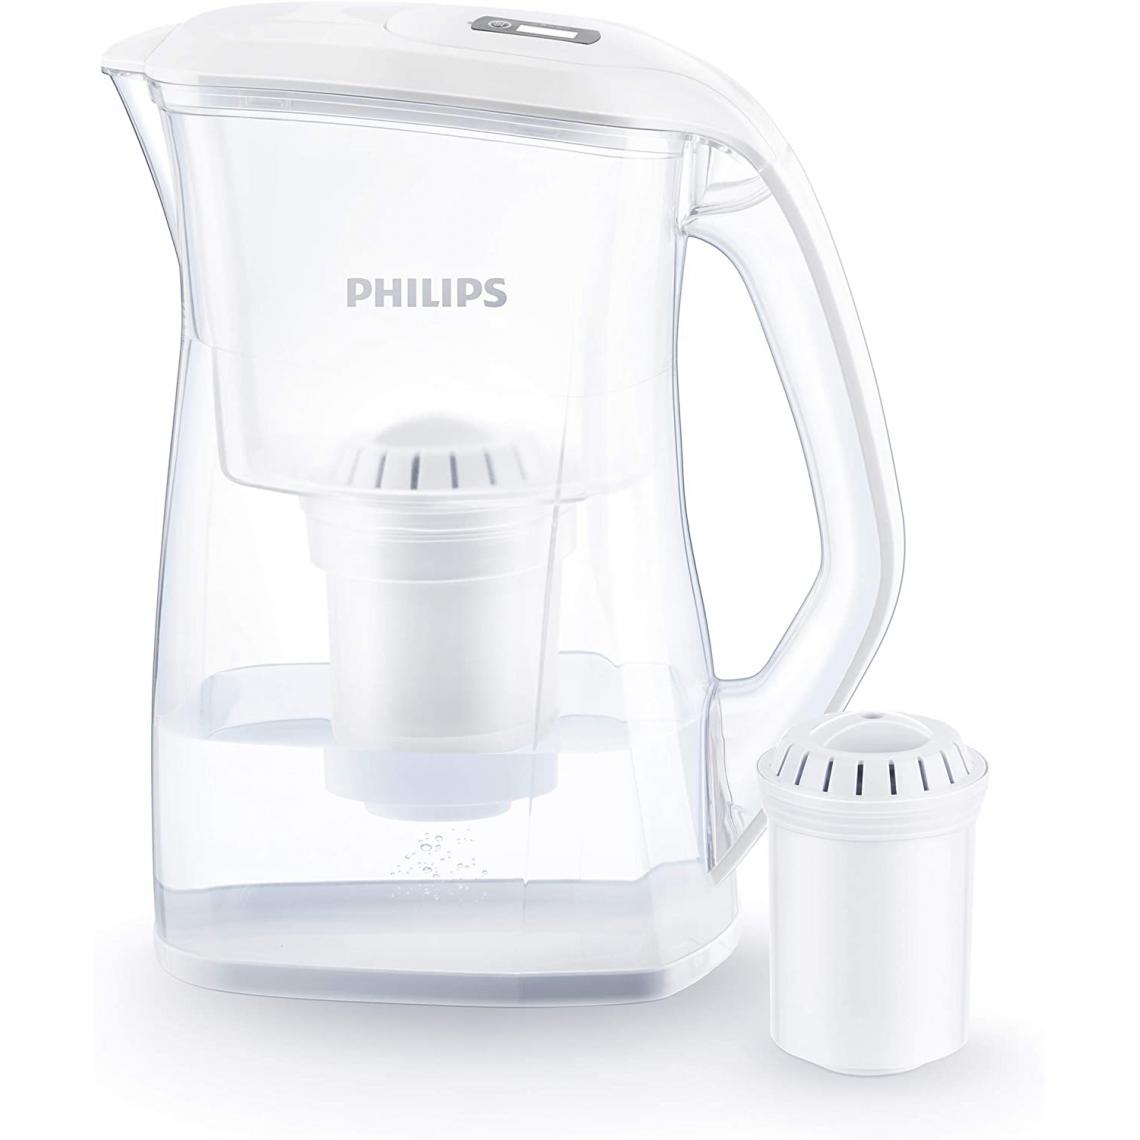 Philips - Philips Wasserfilter-Karaffe Carafe Filtrante AWP2970 +1 Filtre-Ultrafiltration Bactéries, Calcaire, Chlore, Plomb et Pesticides, Blanc - Carafe filtrante